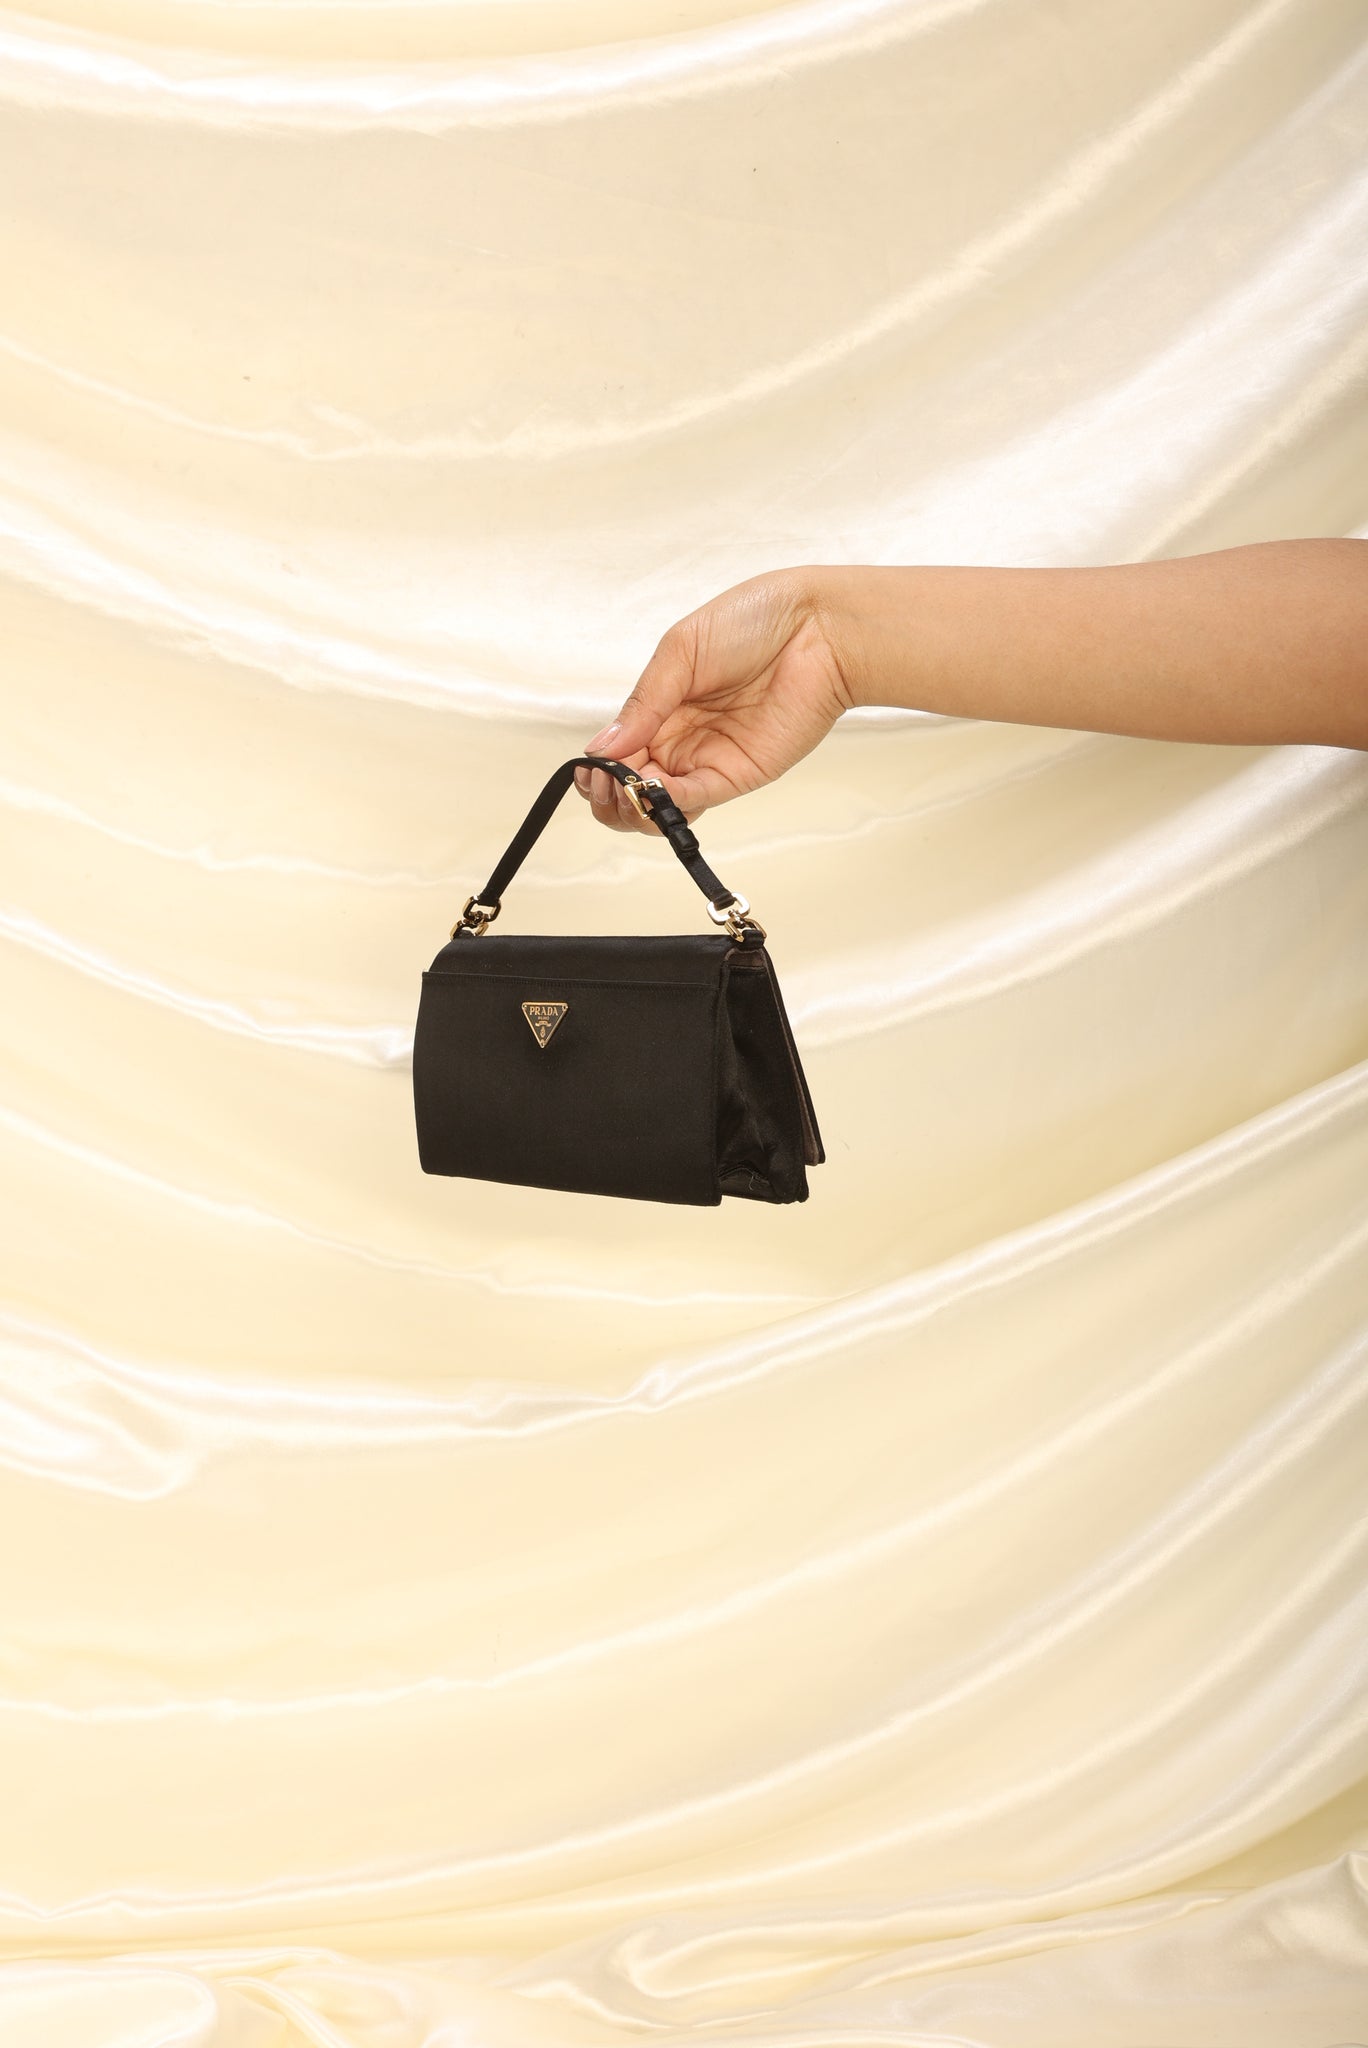 Prada, Bags, Prada Nylon Minipochette Handbag Dark Brown